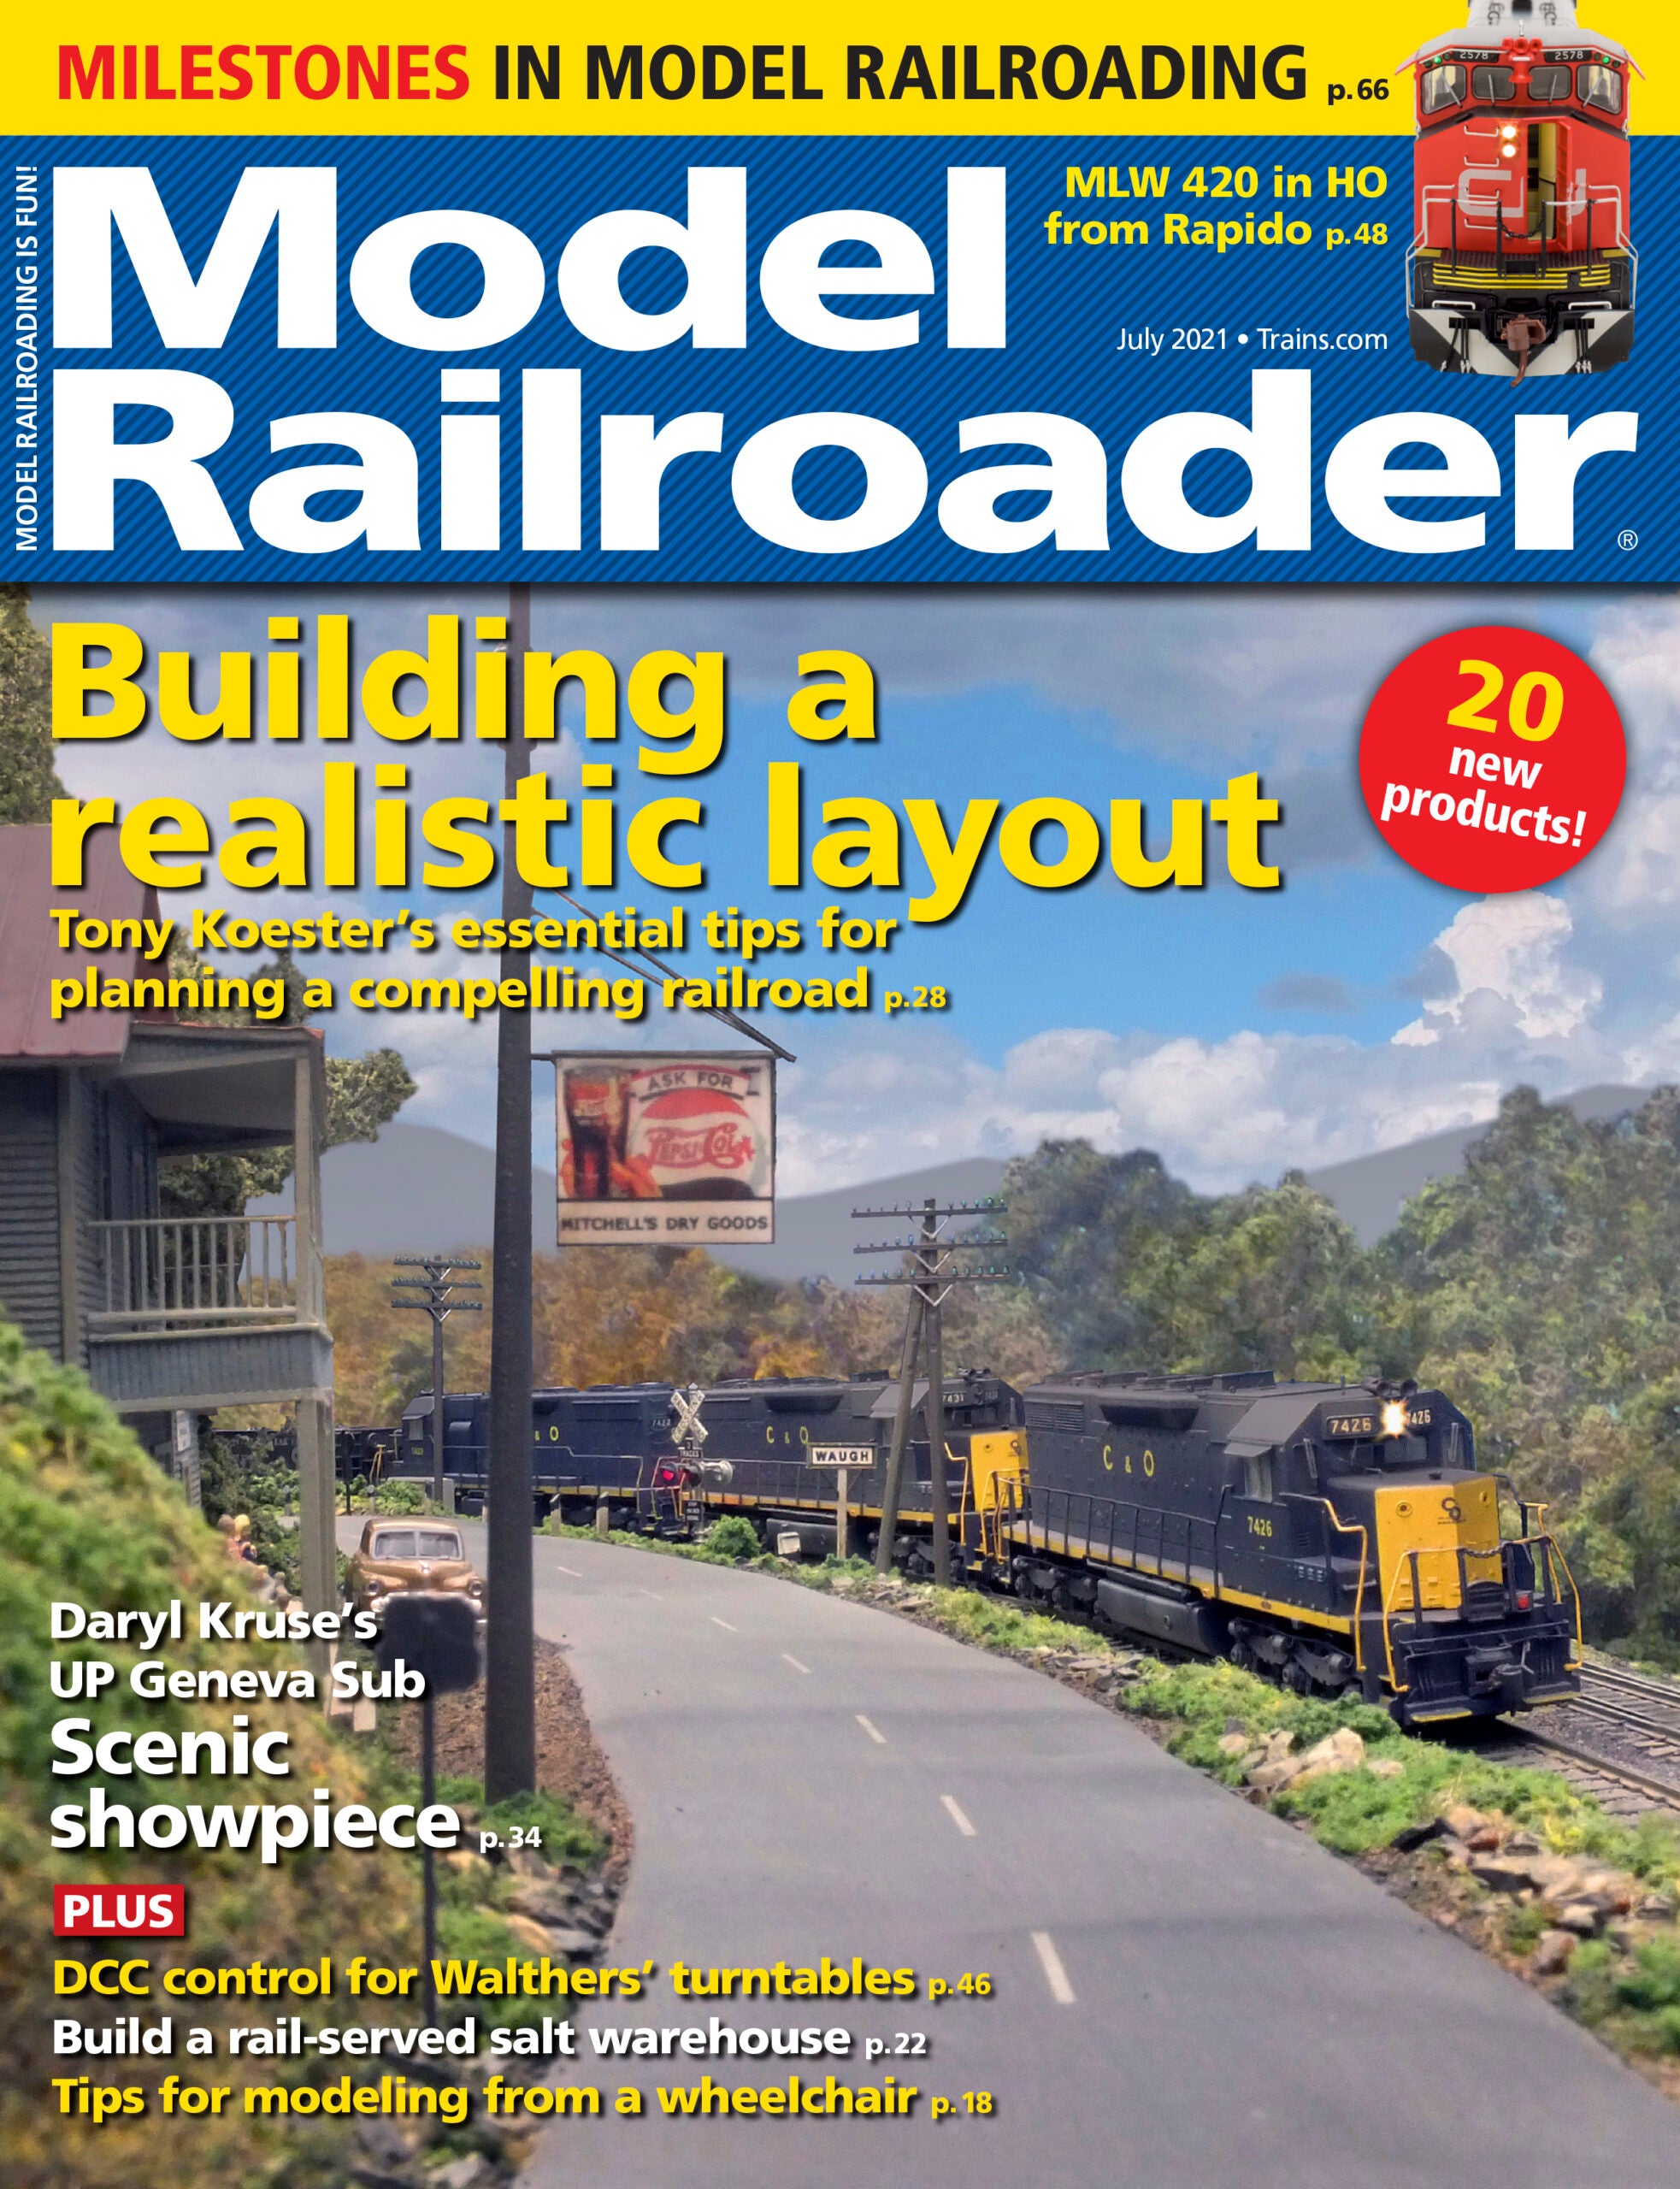 Model Railroader - Magazine - Vol. 88 - Issue 07 - July 2021